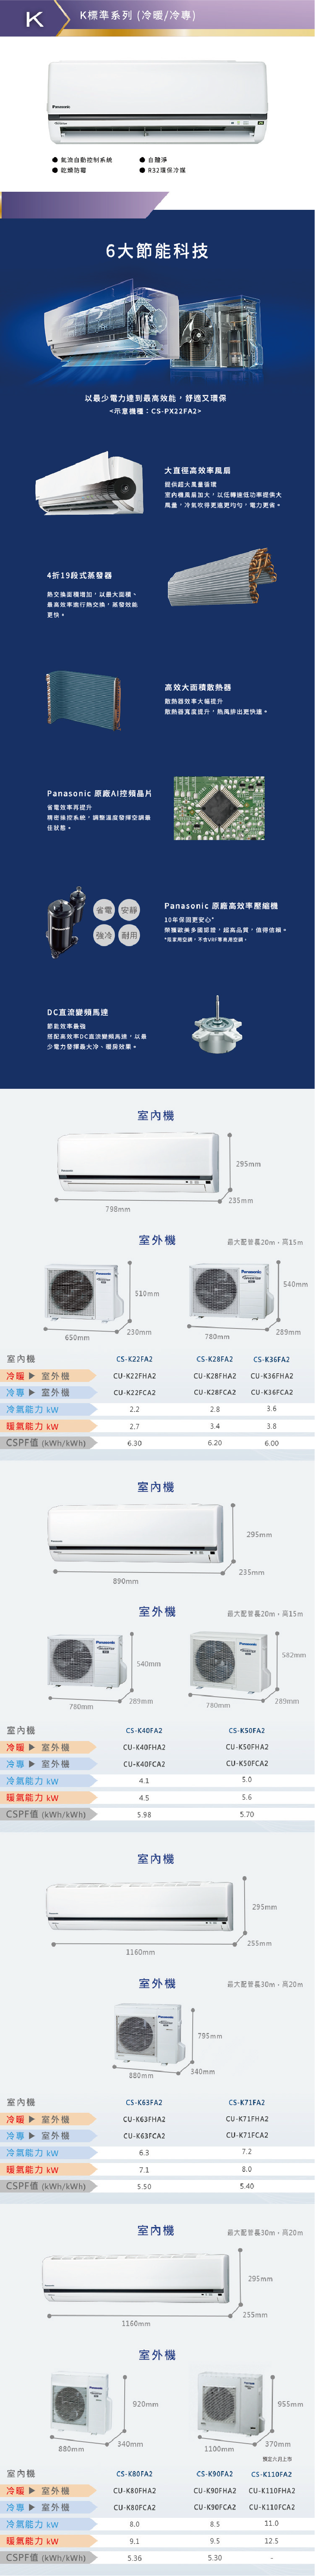 CU-K80FCA2 14坪適用 K系列 一對一 分離式 變頻 冷專 冷氣 CS-K80FA2